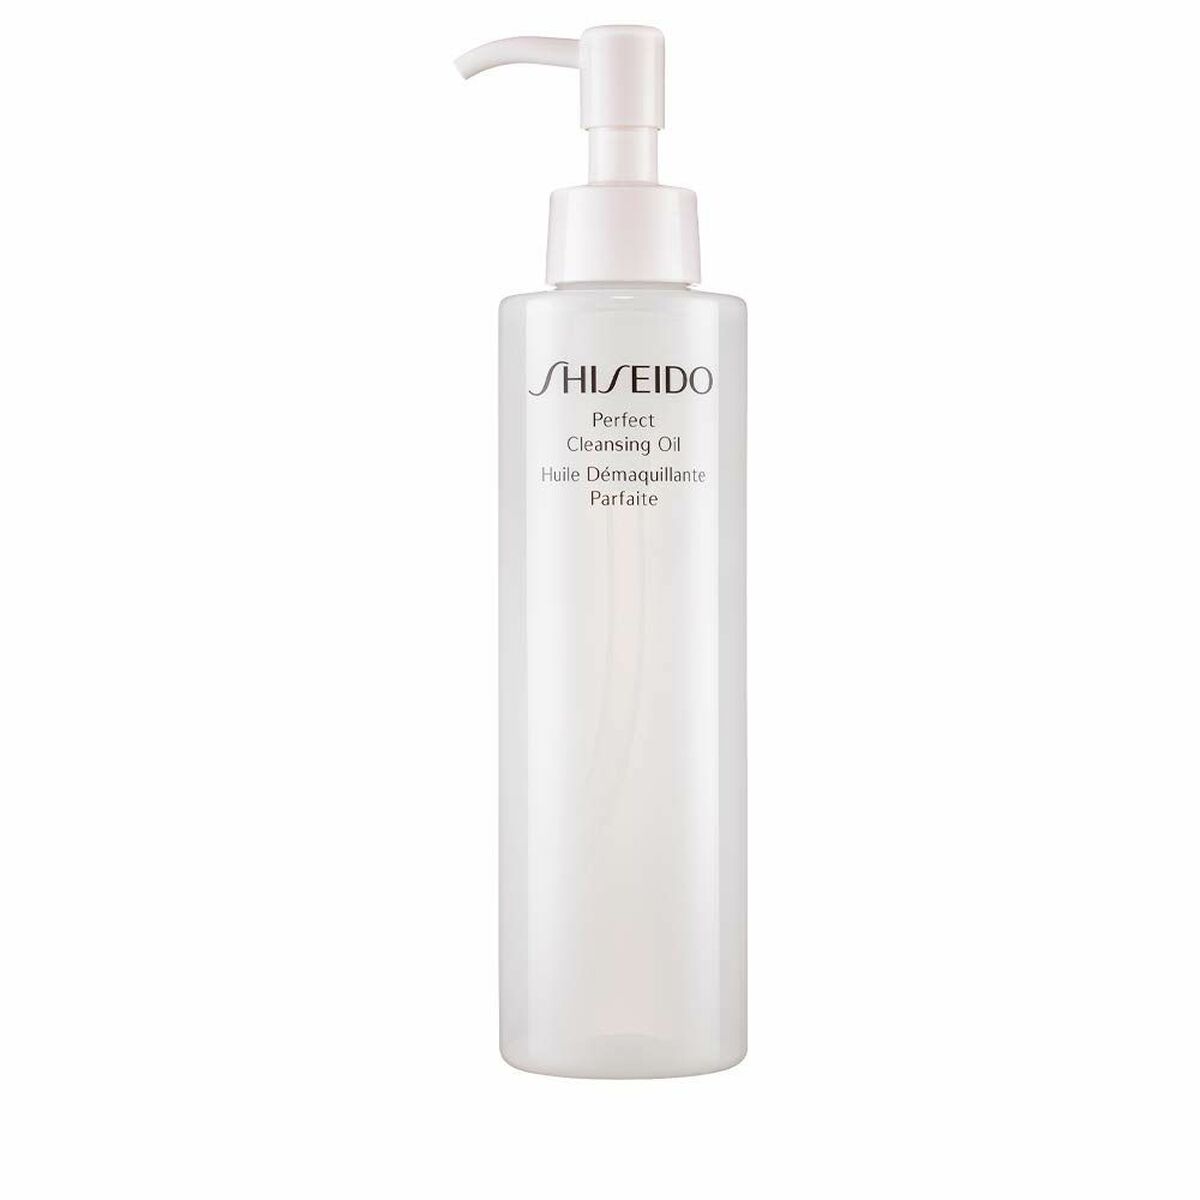 Reinigungsöl Perfect Shiseido 0729238114784